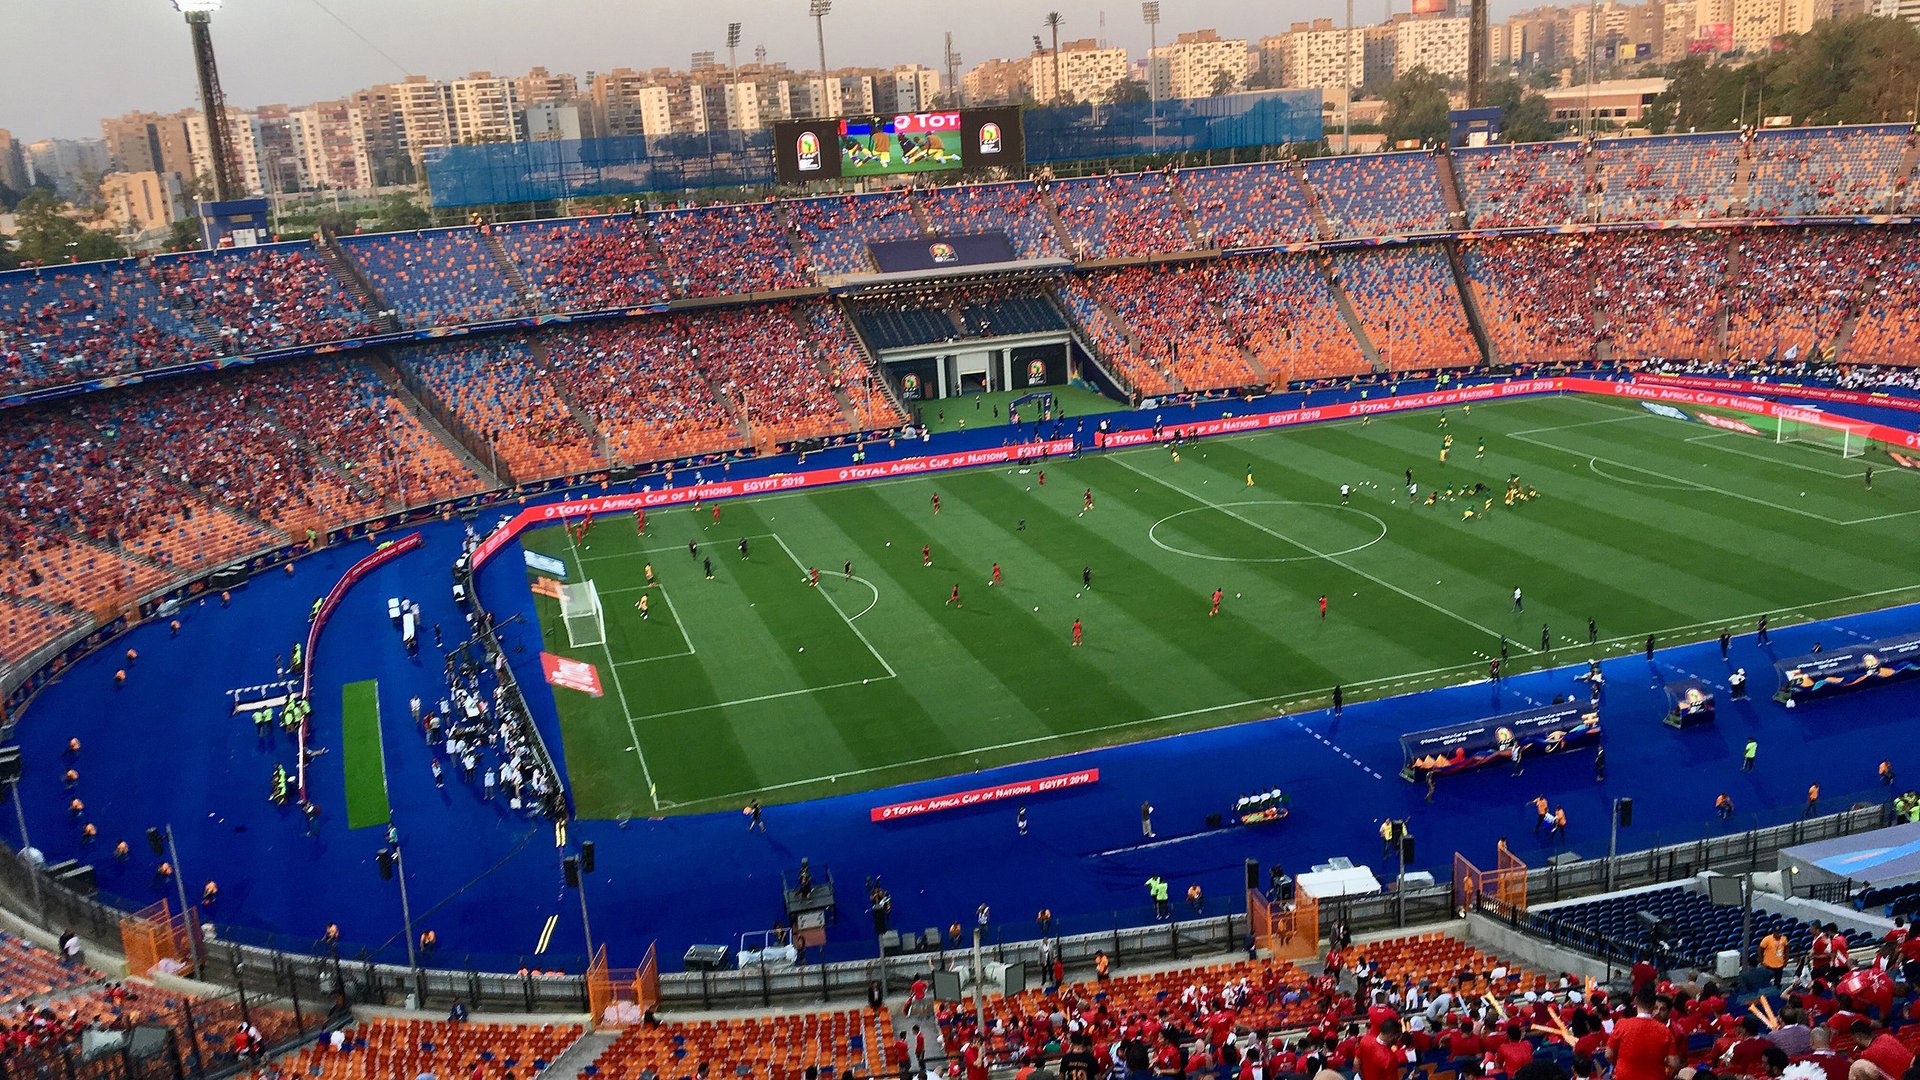 Le stade international du Caire. © Crosskimo/Wikimedia